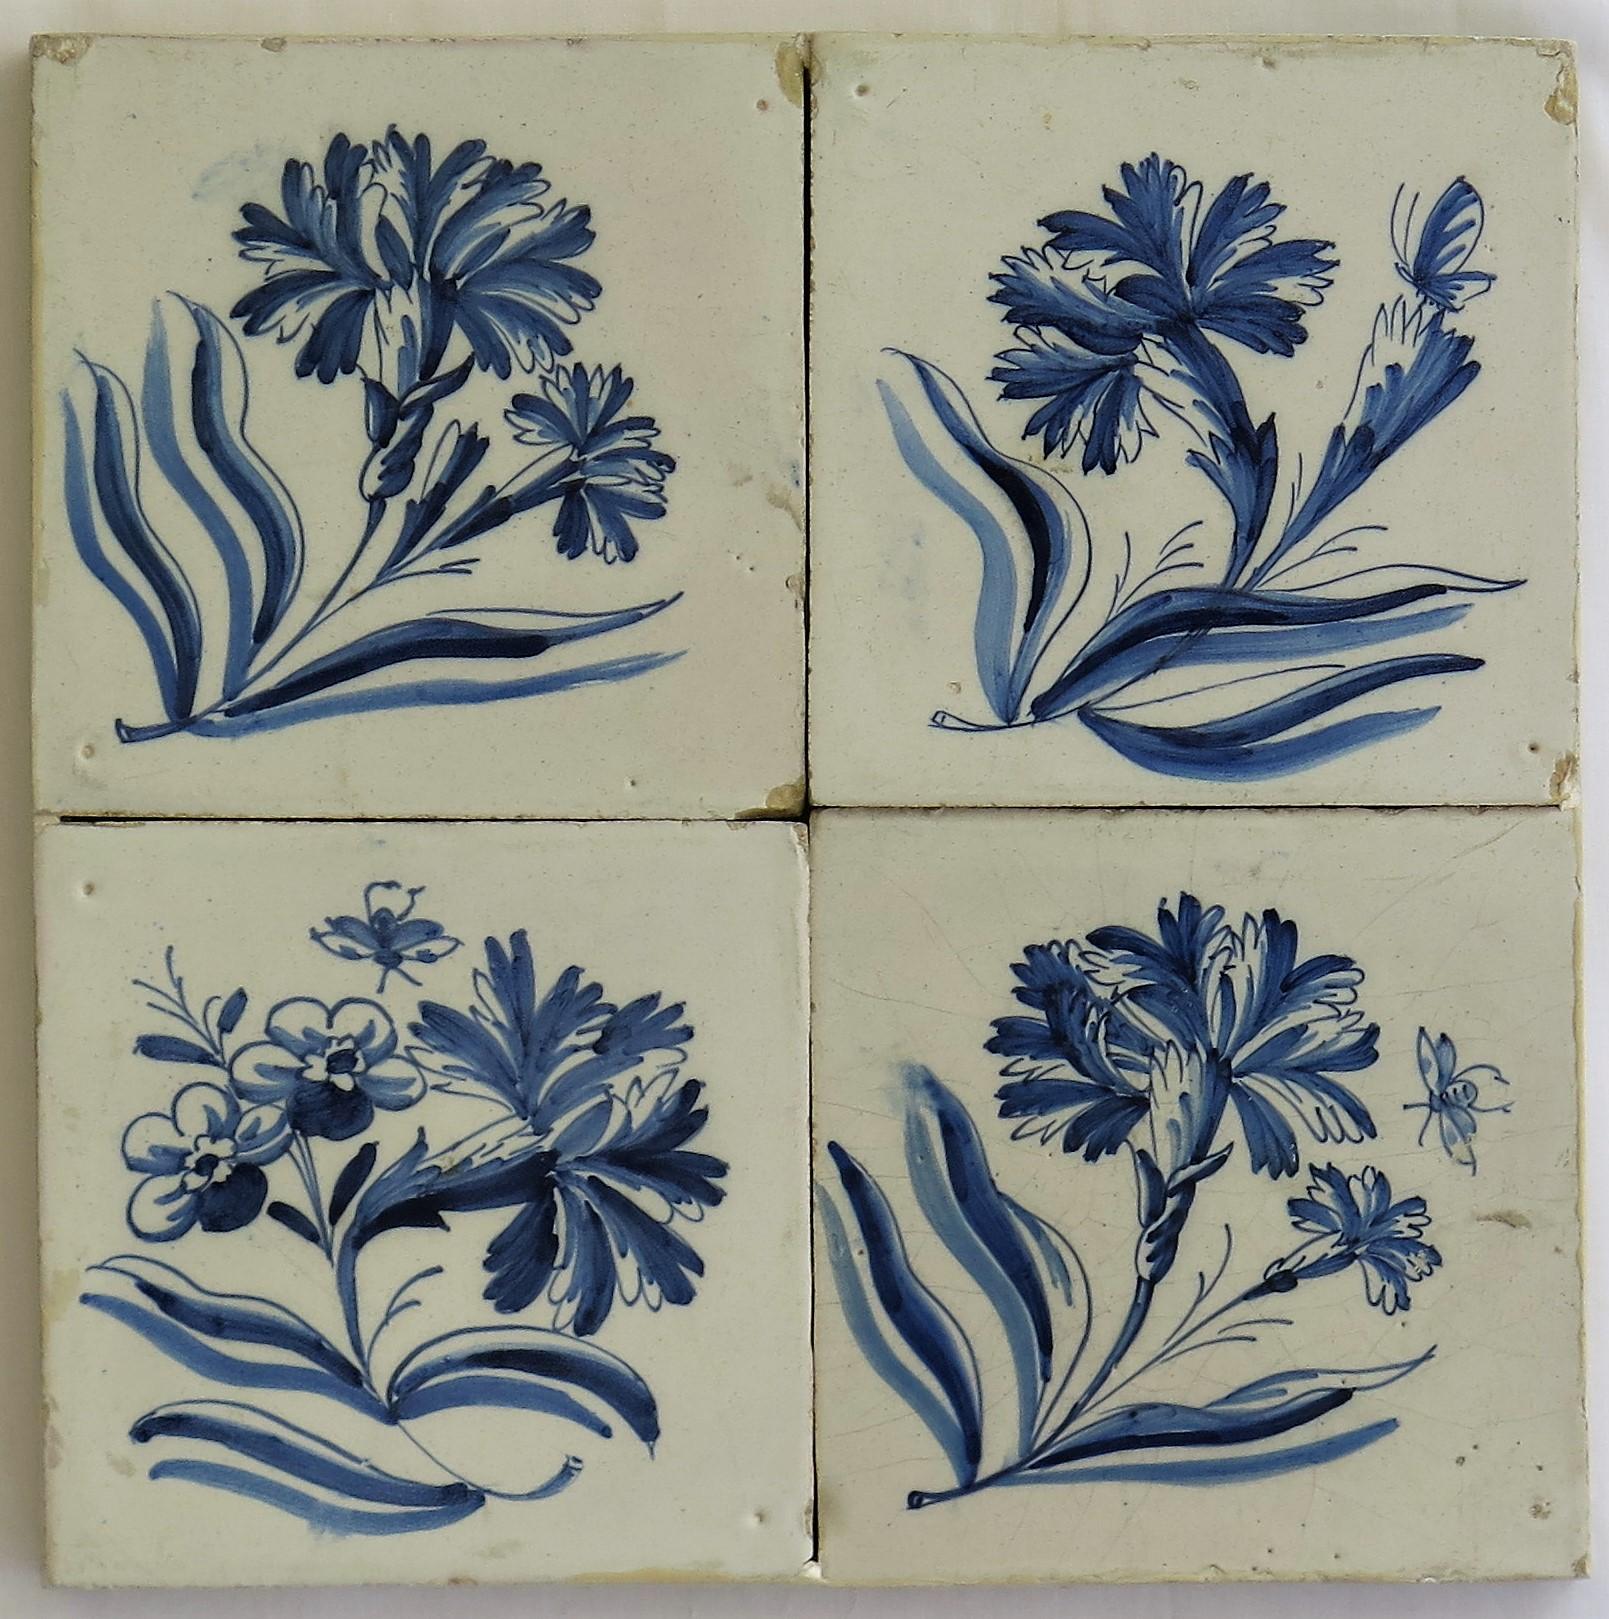 17th century delft tiles